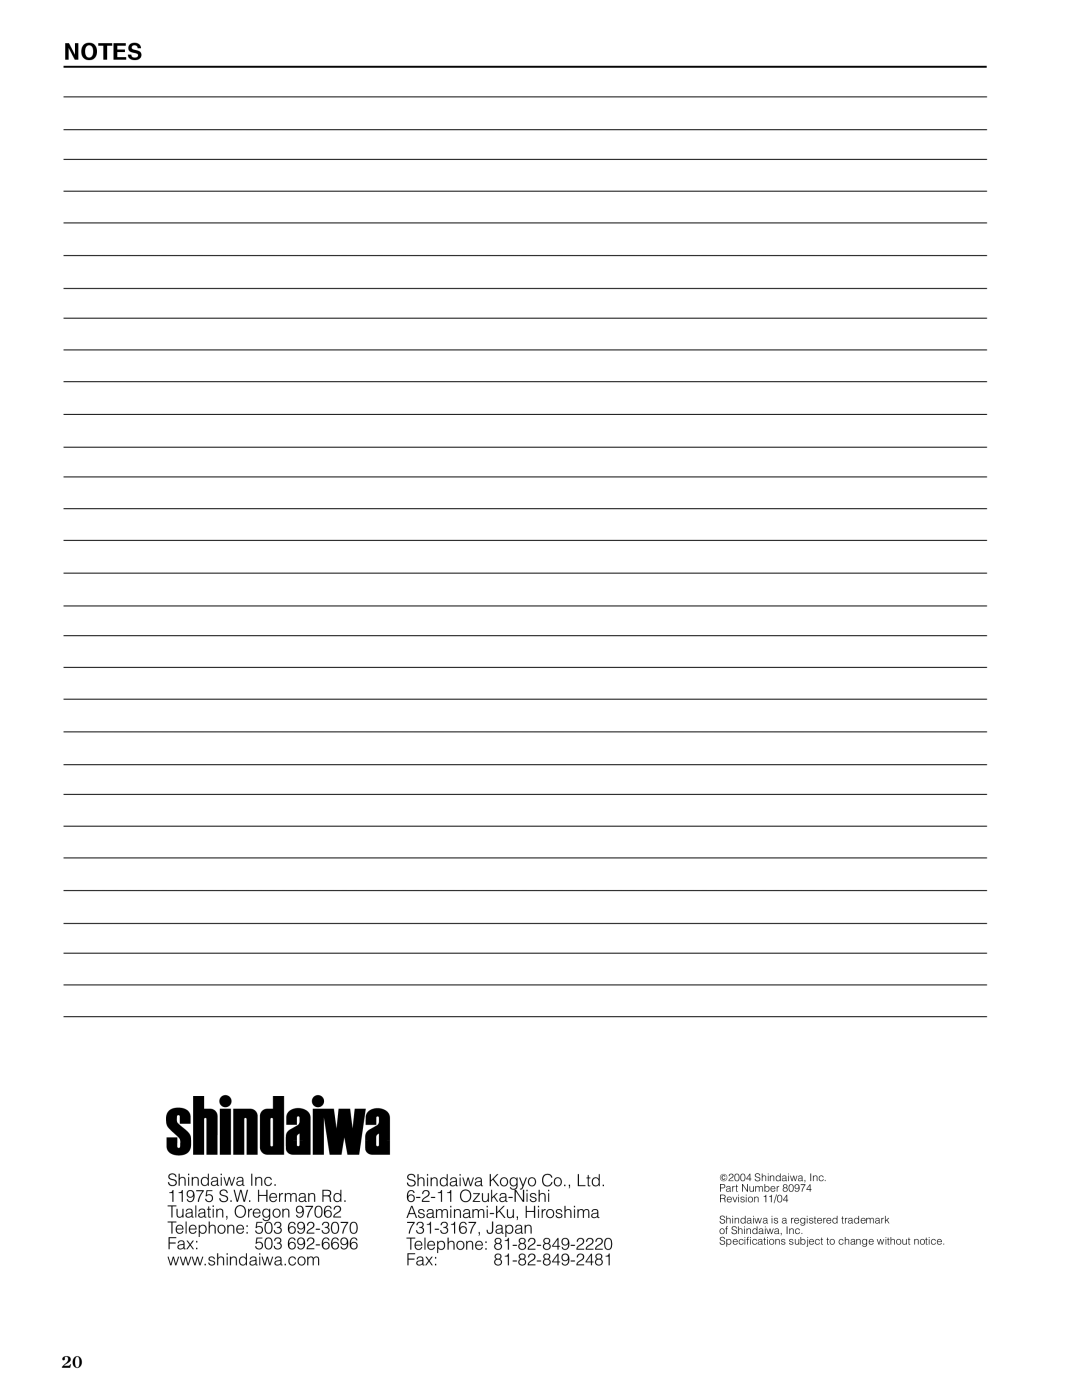 Shindaiwa 80974 2004 Shindaiwa, Inc Part Number Revision 11/04, Shindaiwa is a registered trademark of Shindaiwa, Inc 